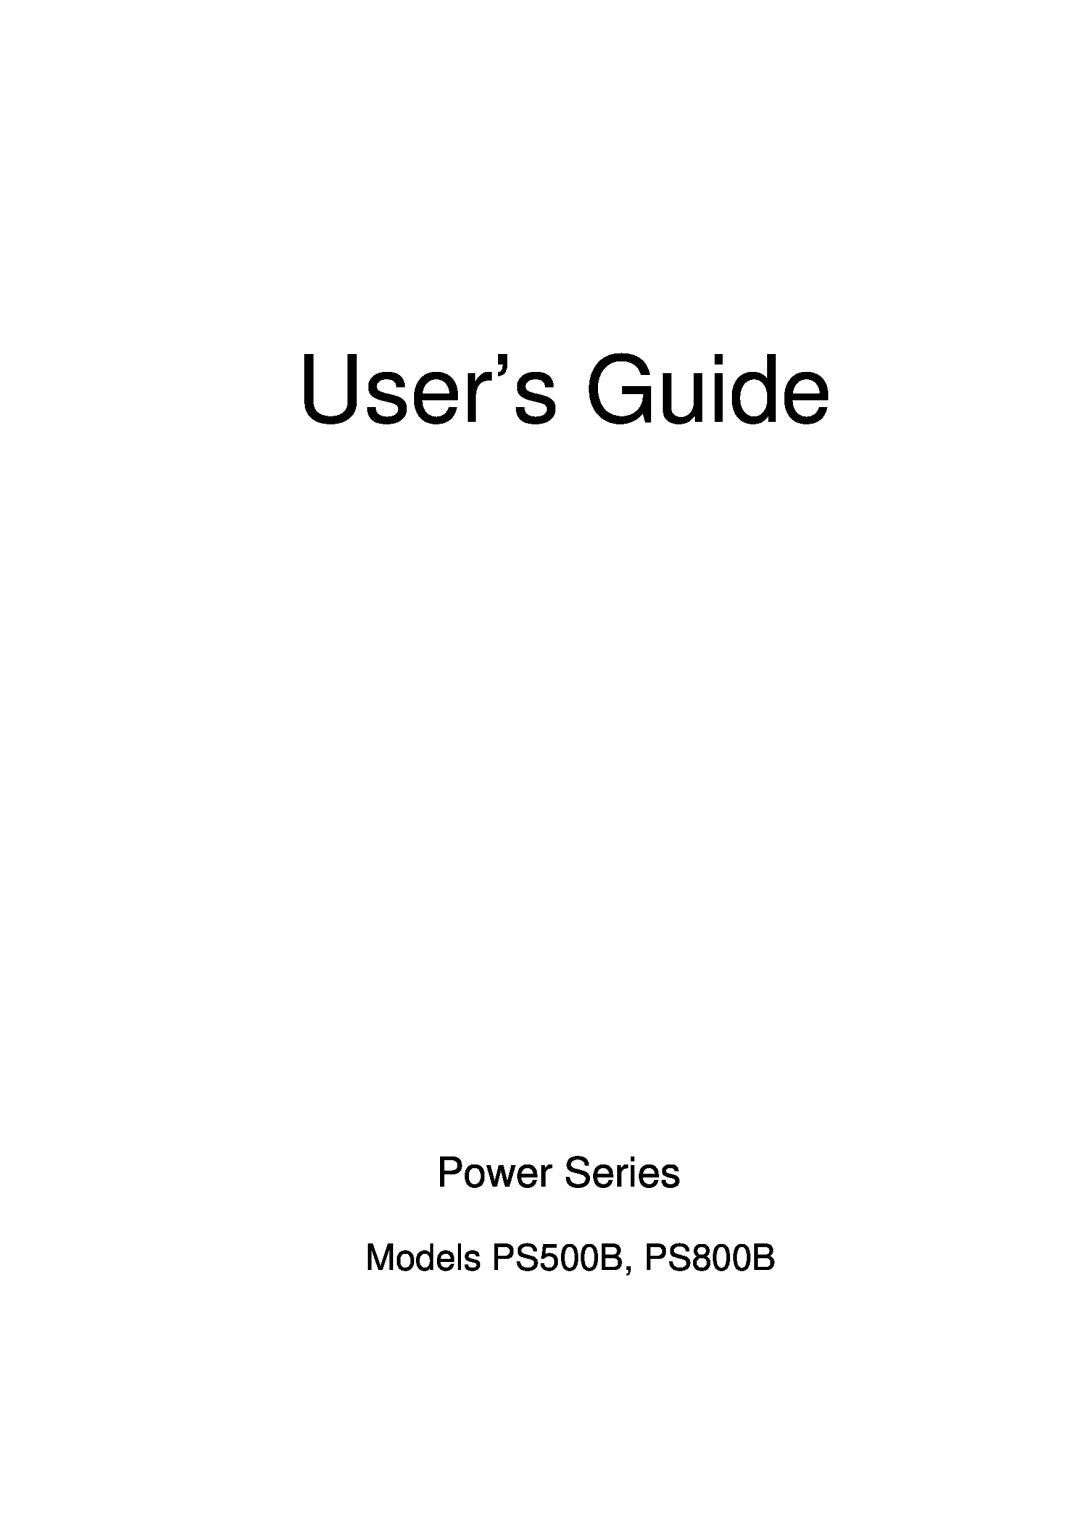 ViewSonic manual User’s Guide, Power Series, Models PS500B, PS800B 